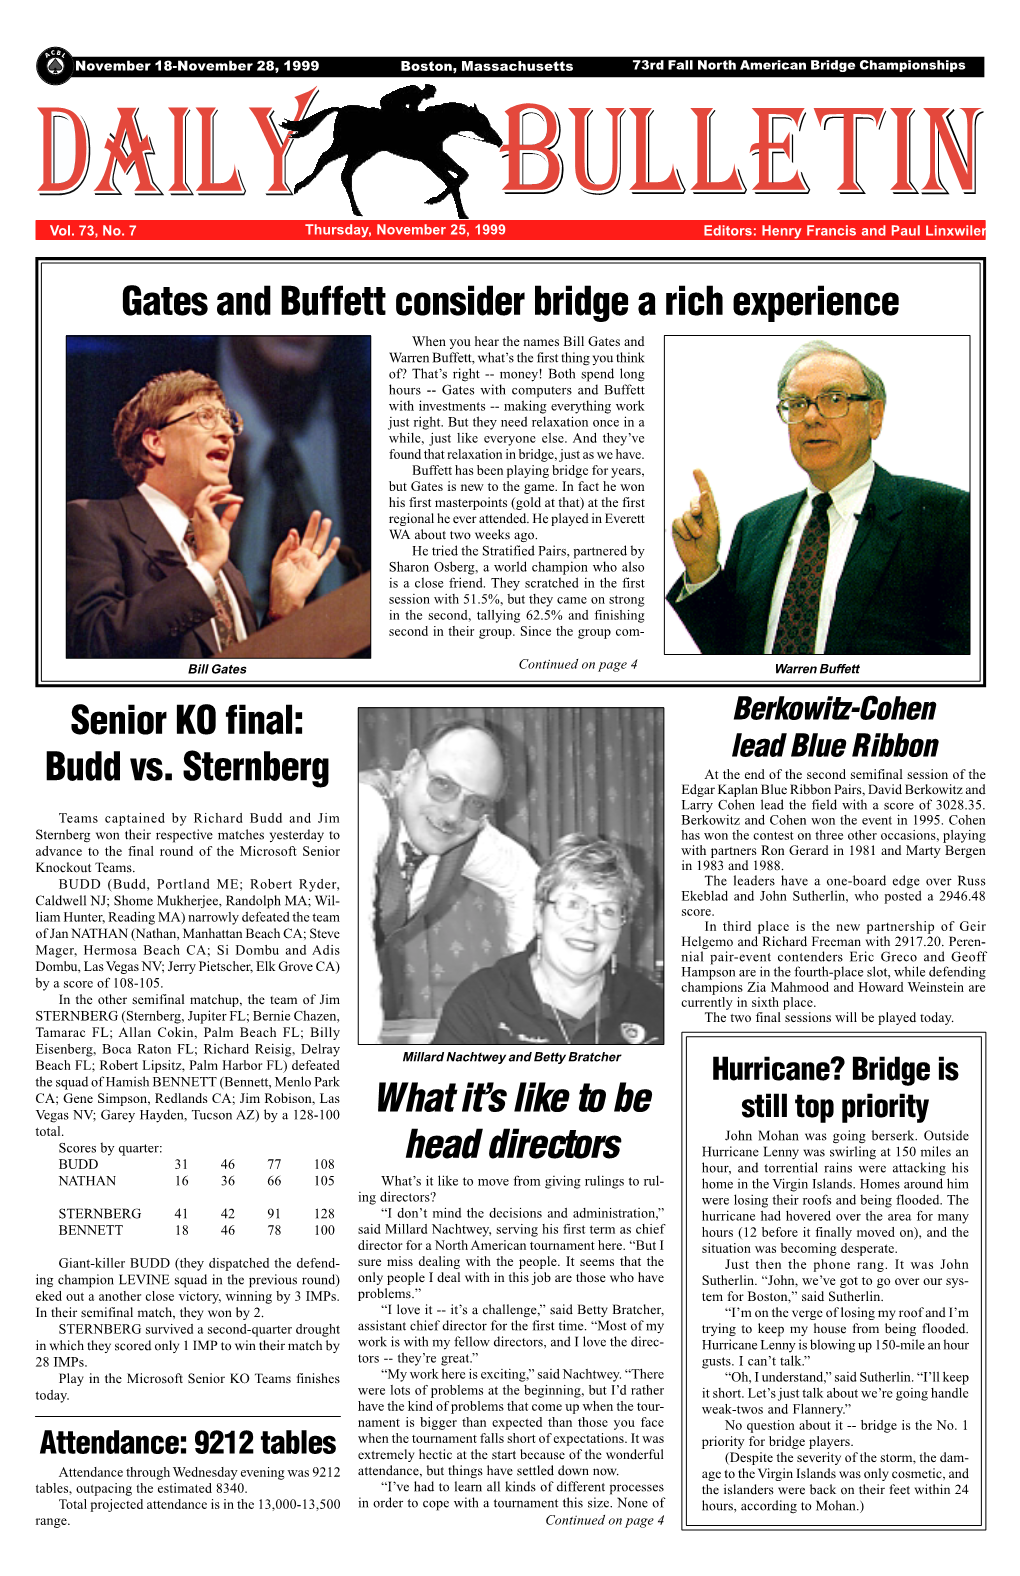 Boston Daily Bulletin 7